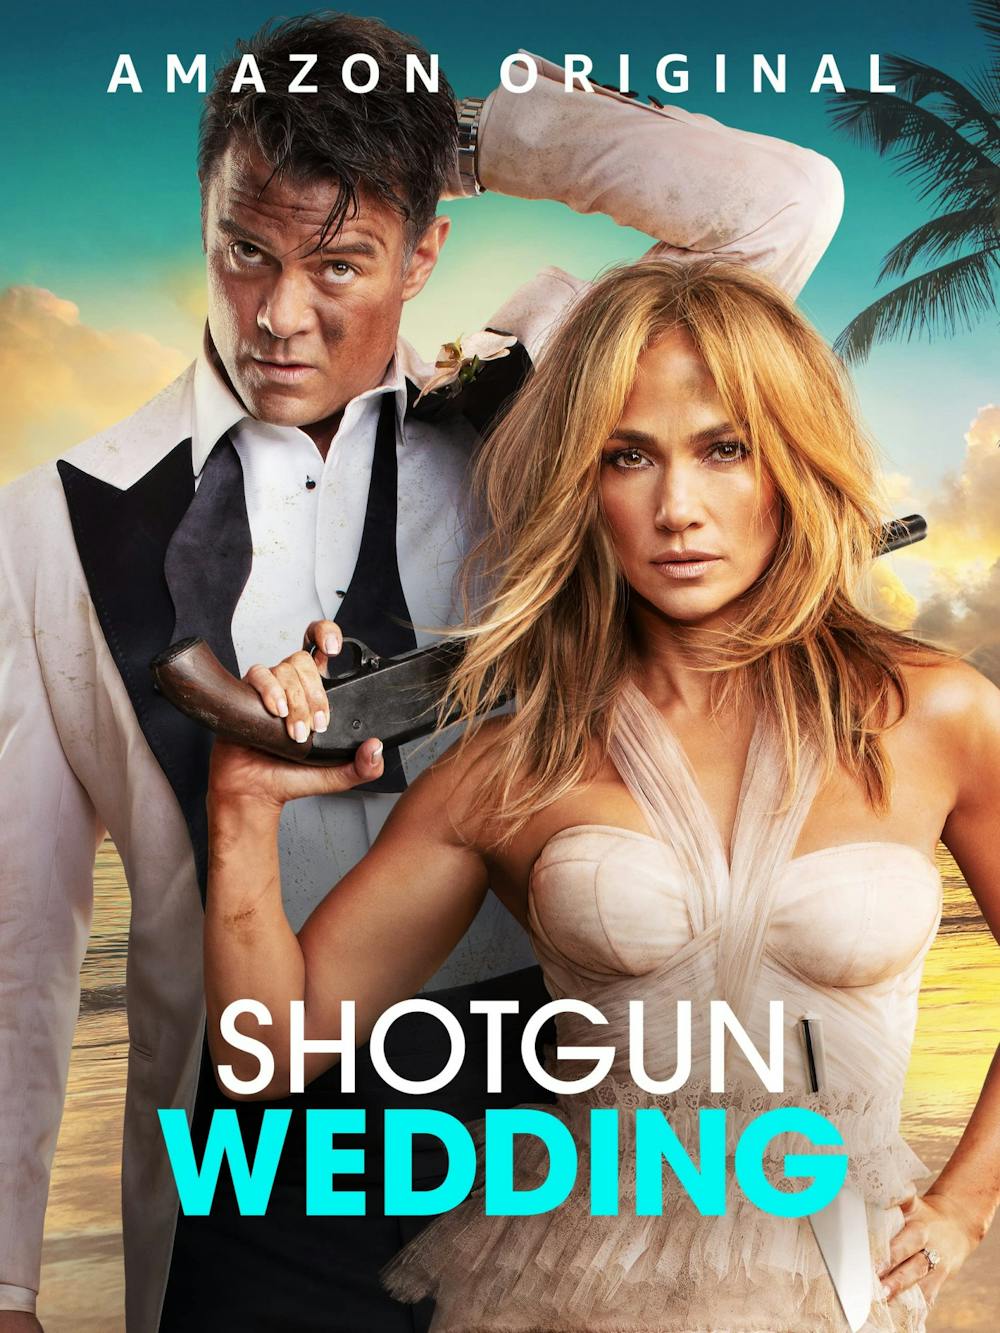 Review: ‘Shotgun Wedding’ is a straightforward watch for rom-com fans